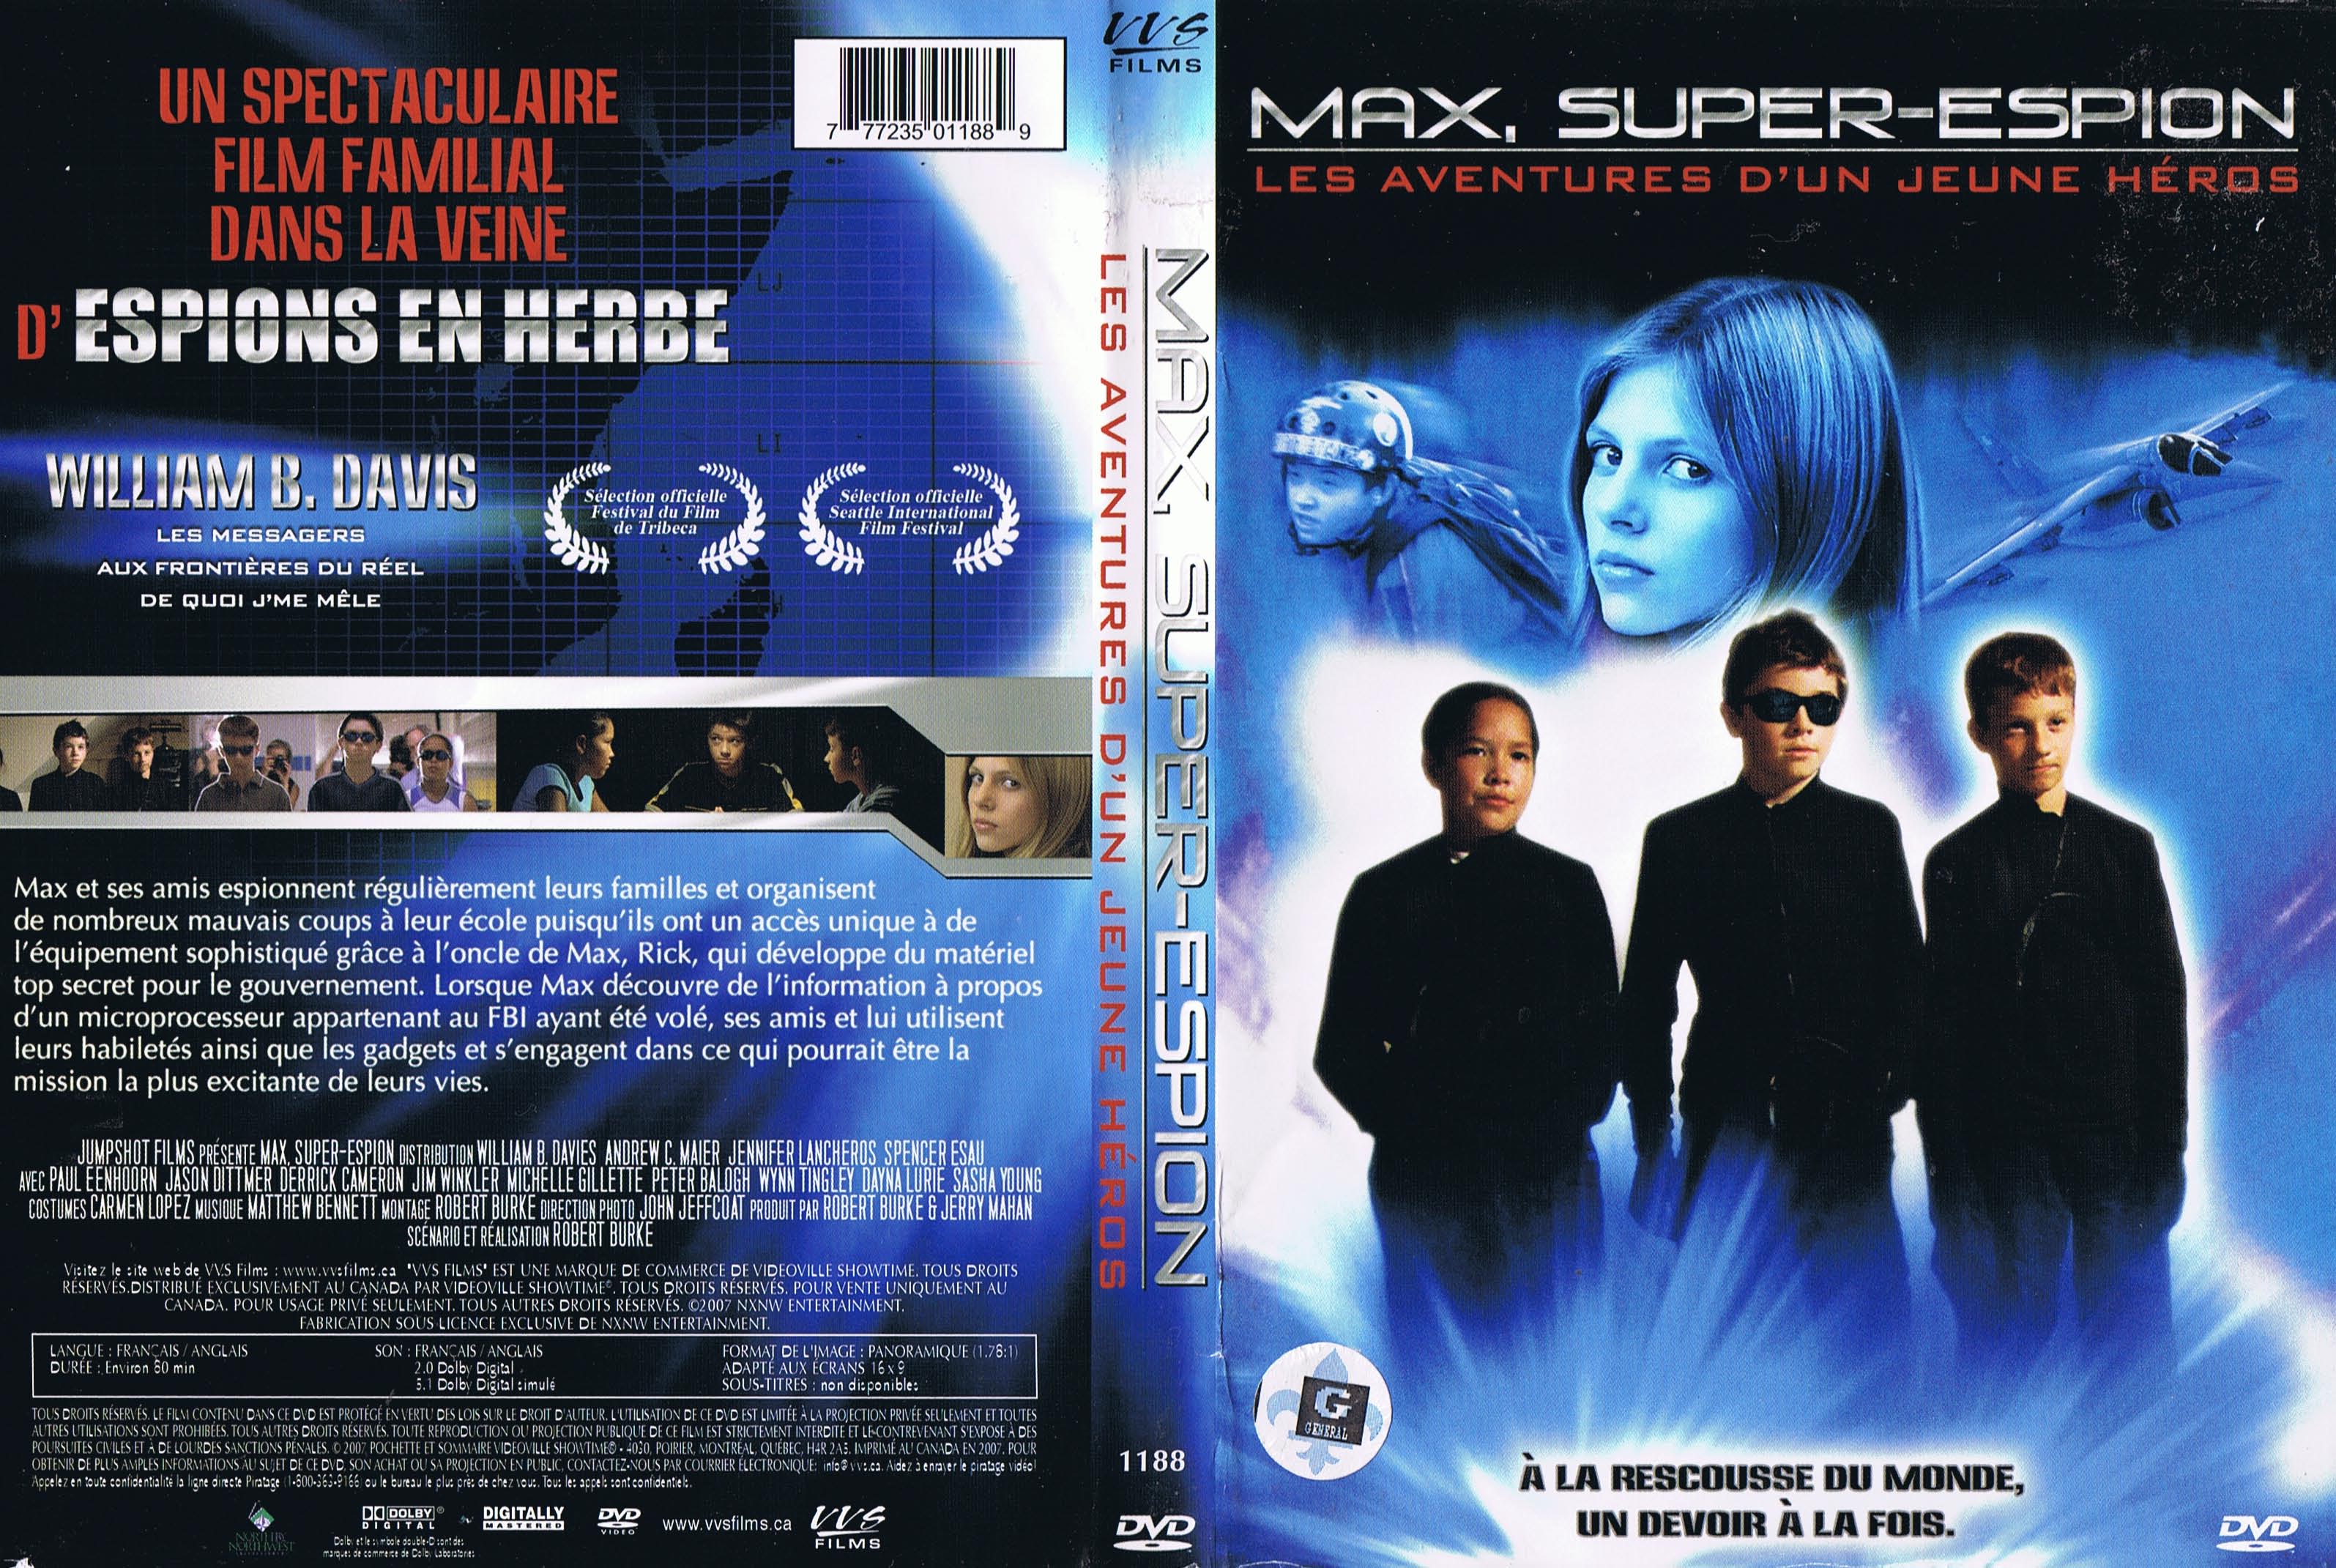 Jaquette DVD Max super espion (Canadienne)